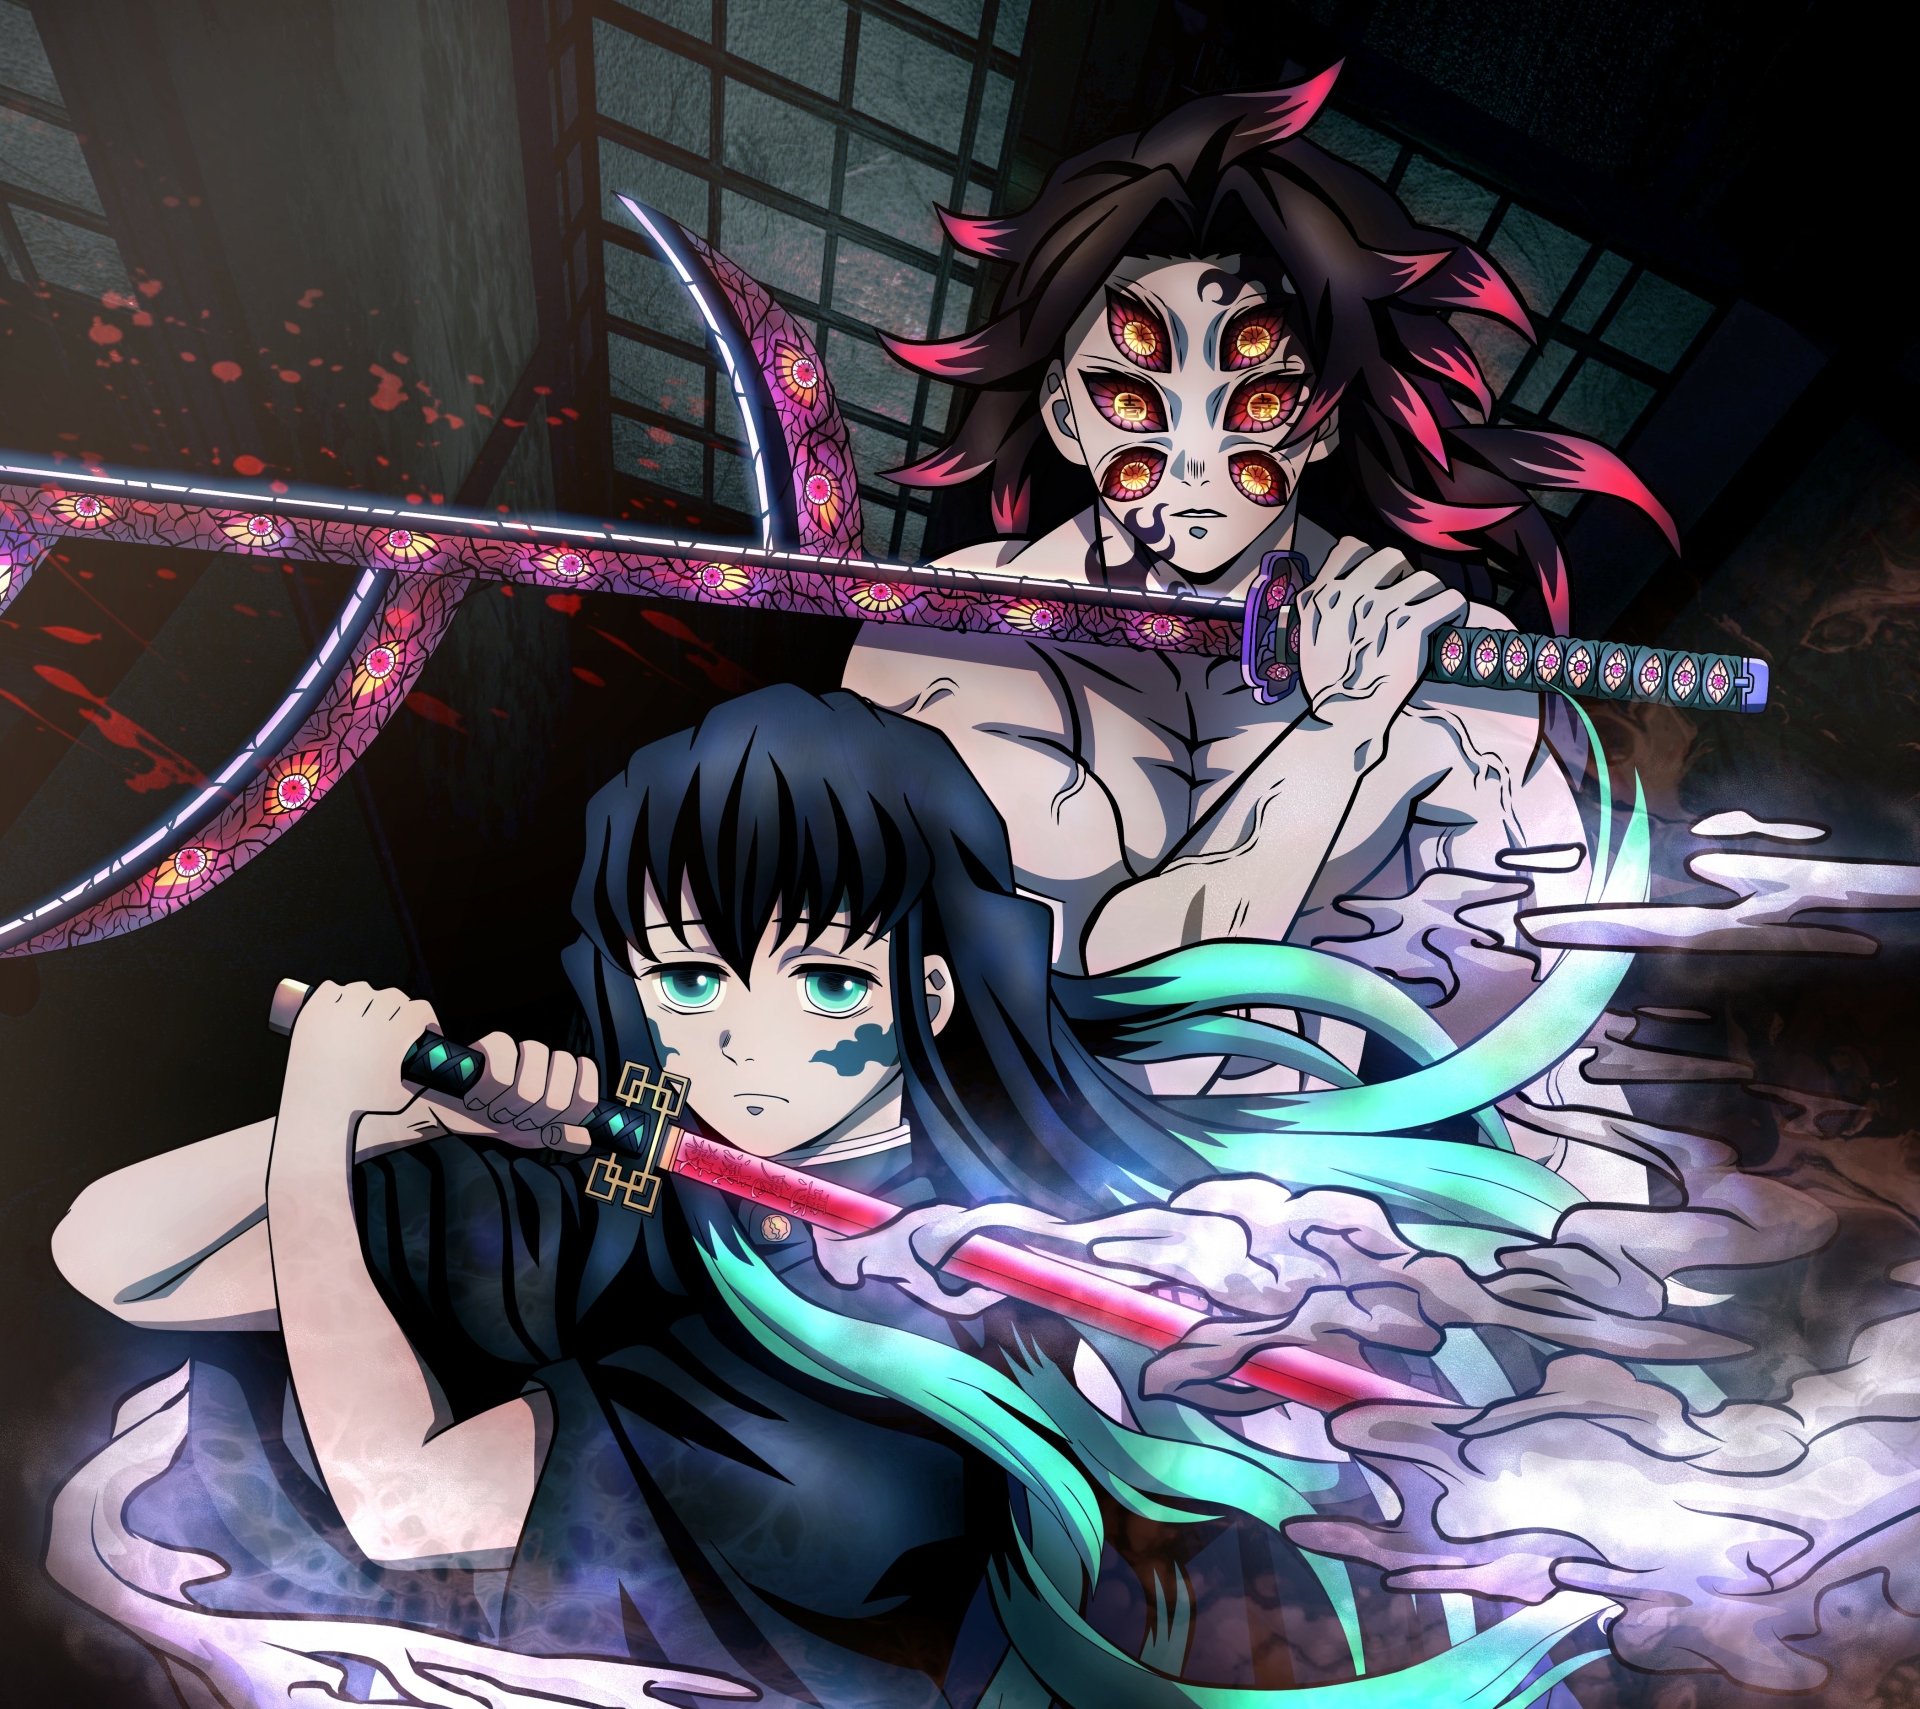 Anime Demon Slayer Kimetsu no Yaiba 4k Ultra HD Wallpaper by DT501061 余佳軒